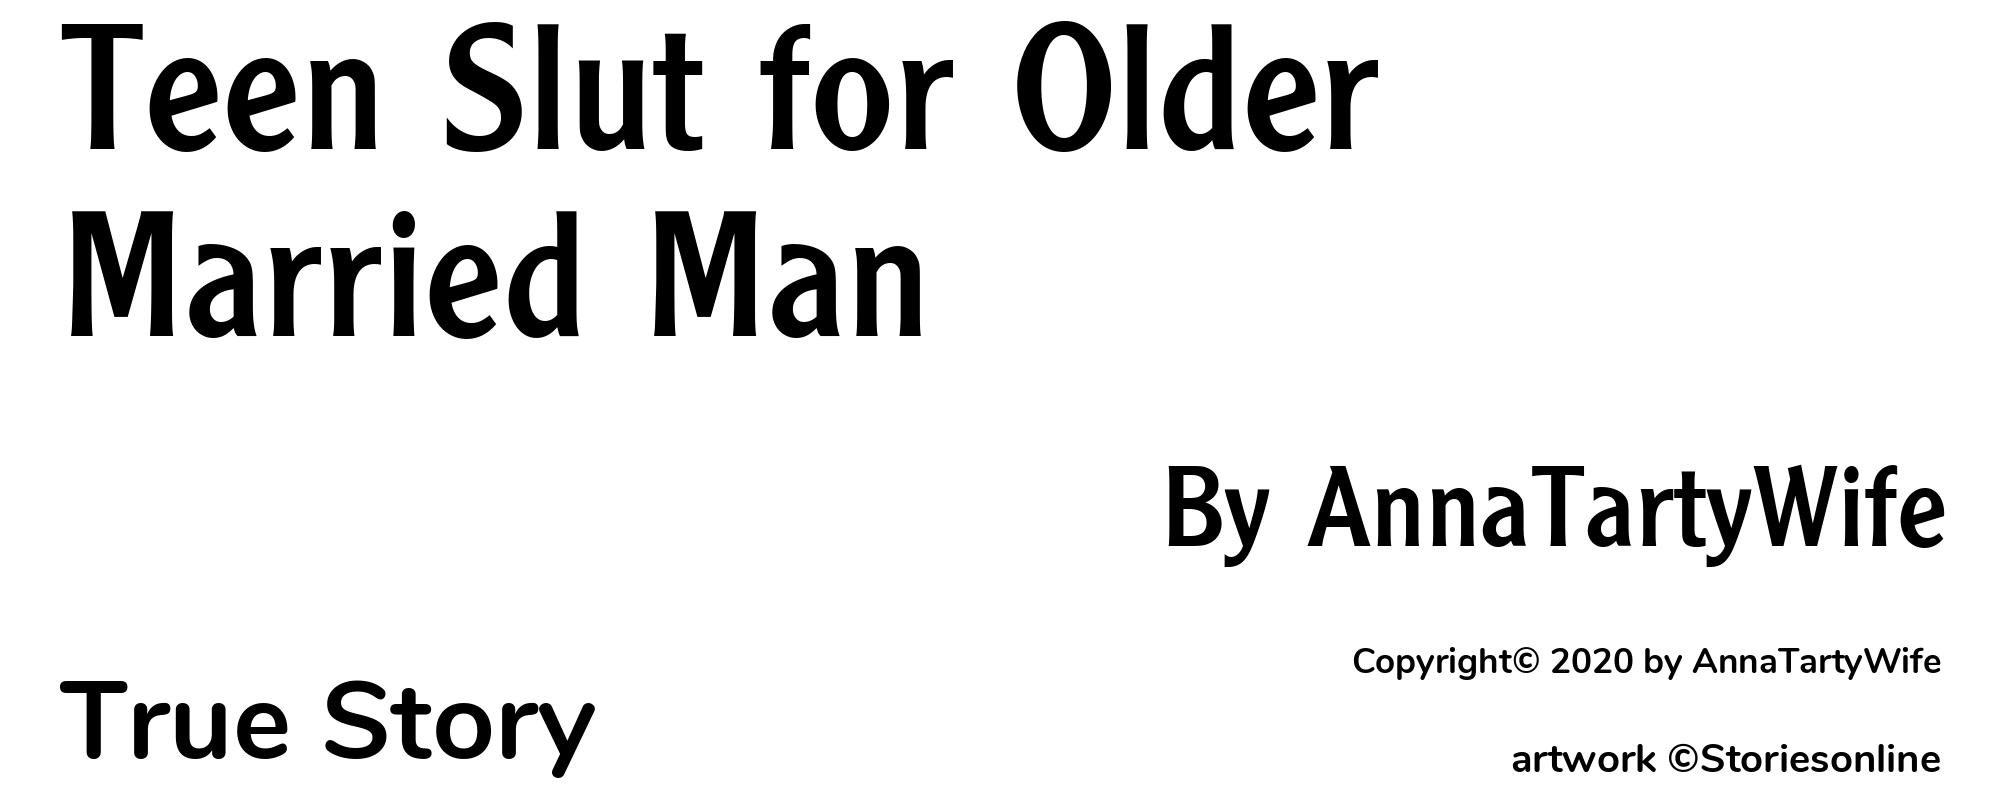 Teen Slut for Older Married Man - Cover